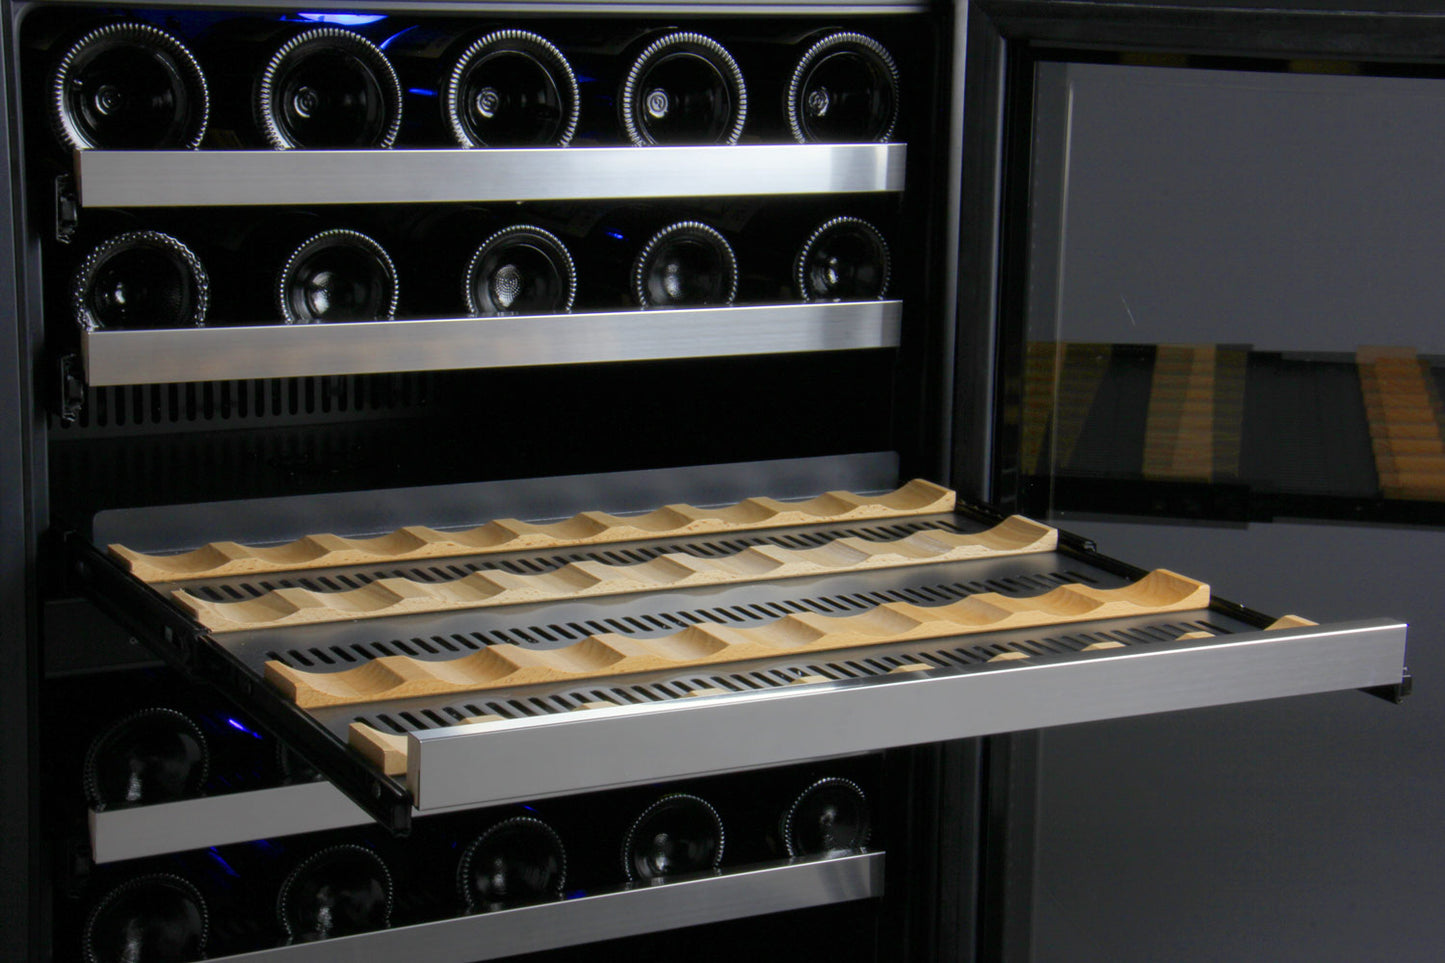 Allavino FlexCount Series 56 Bottle Single Zone Built -in Wine Cooler Refrigerator with Stainless Steel Door-Right Hinge